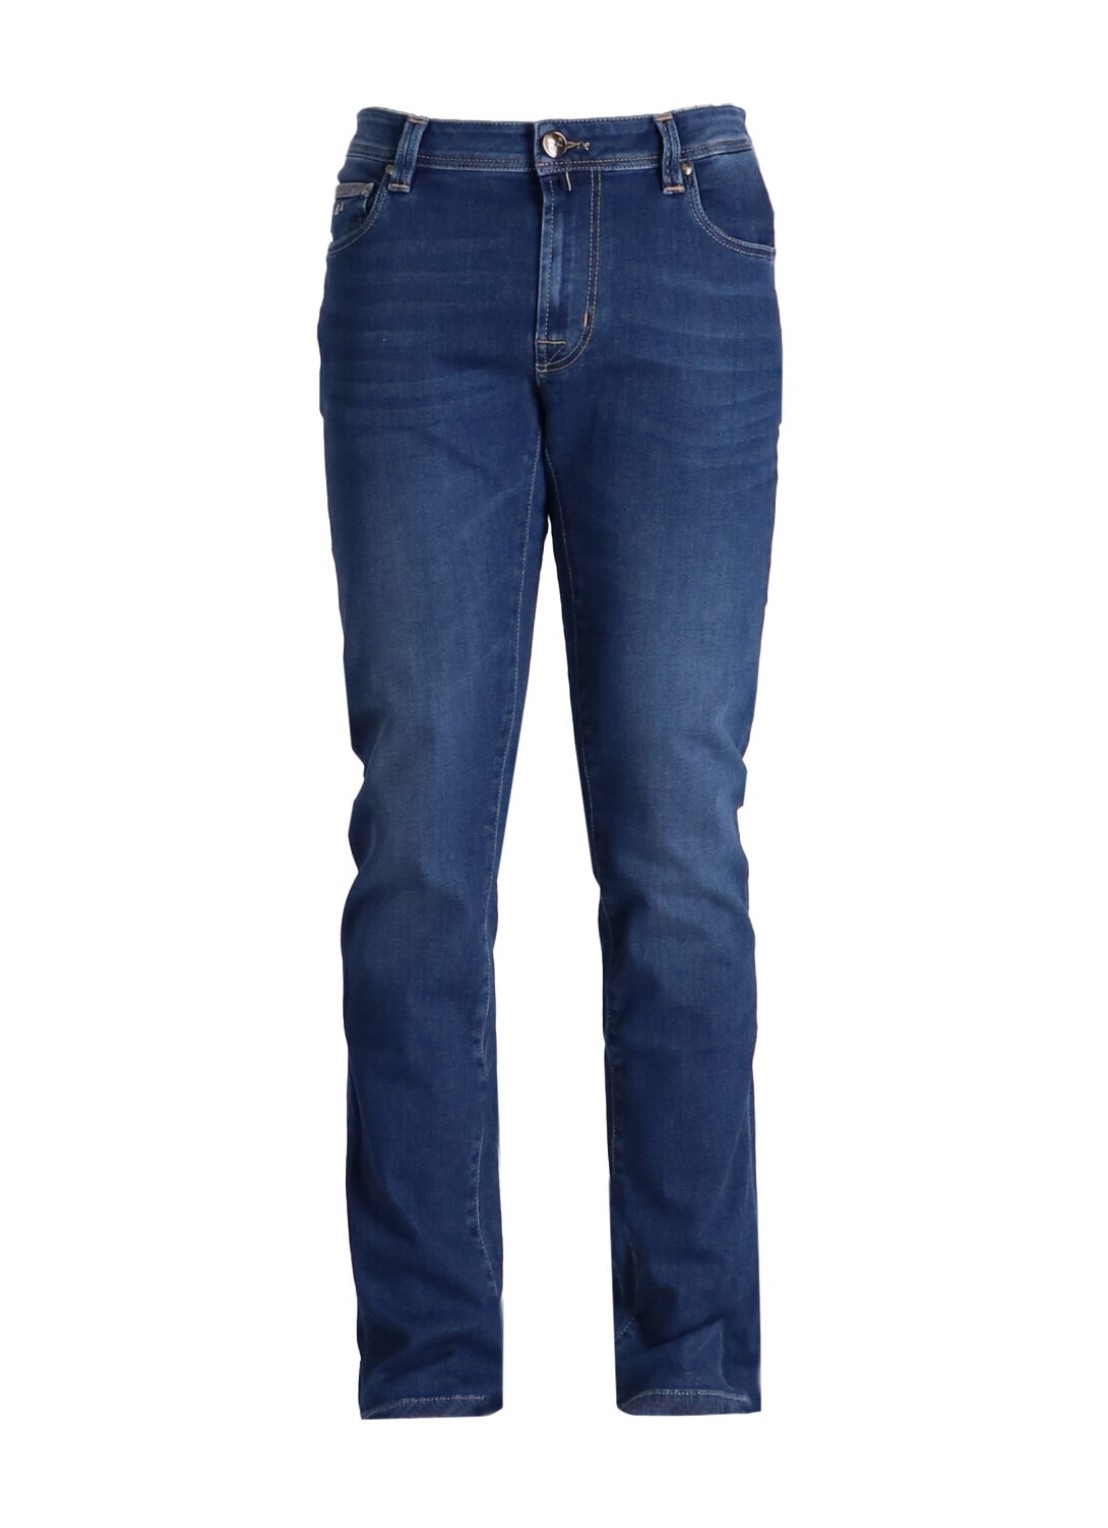 Pantalon jeans tramarossa denim man leonardo zip stre leonardo zip stre 23i12 talla 32
 